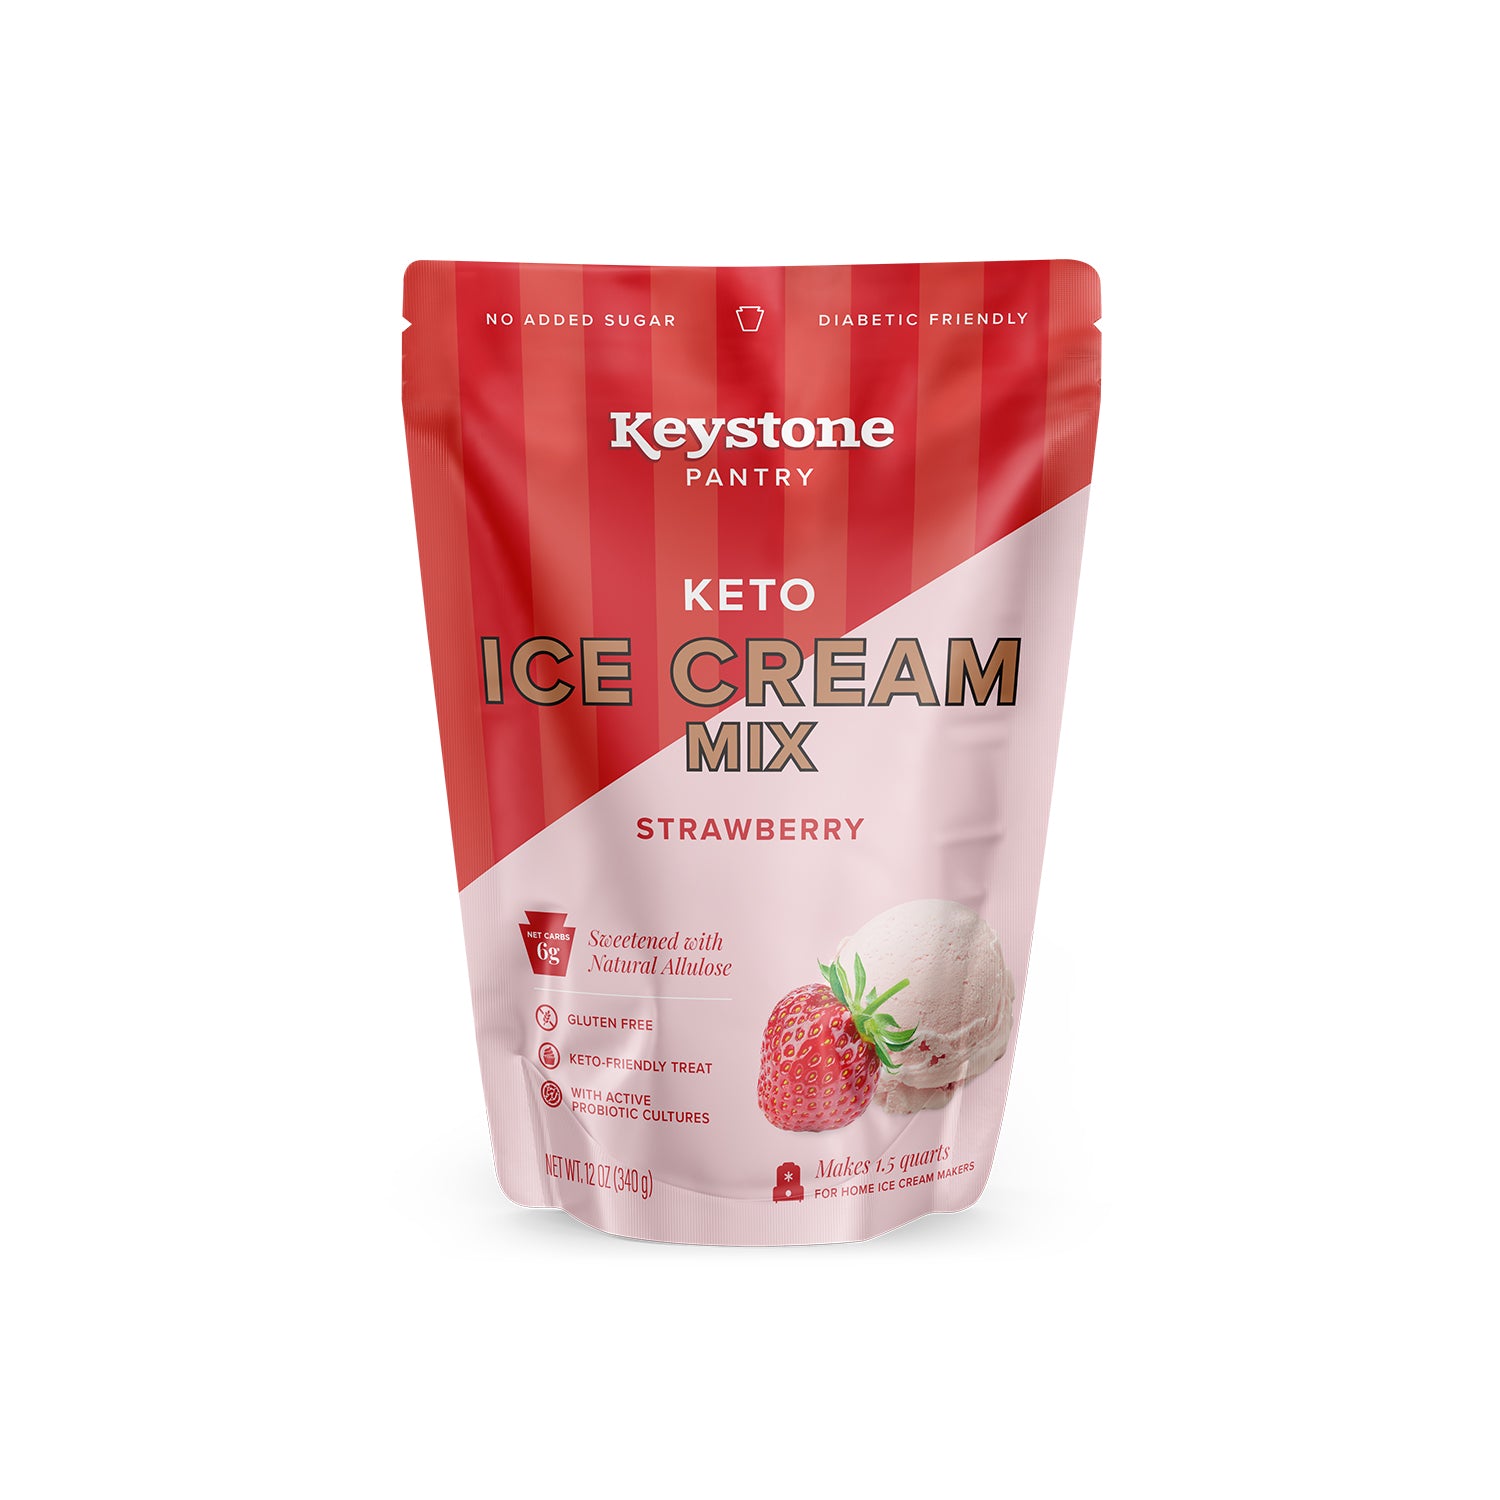 Keystone Pantry Keto Ice Cream Mix Strawberry Diabetic Friendly